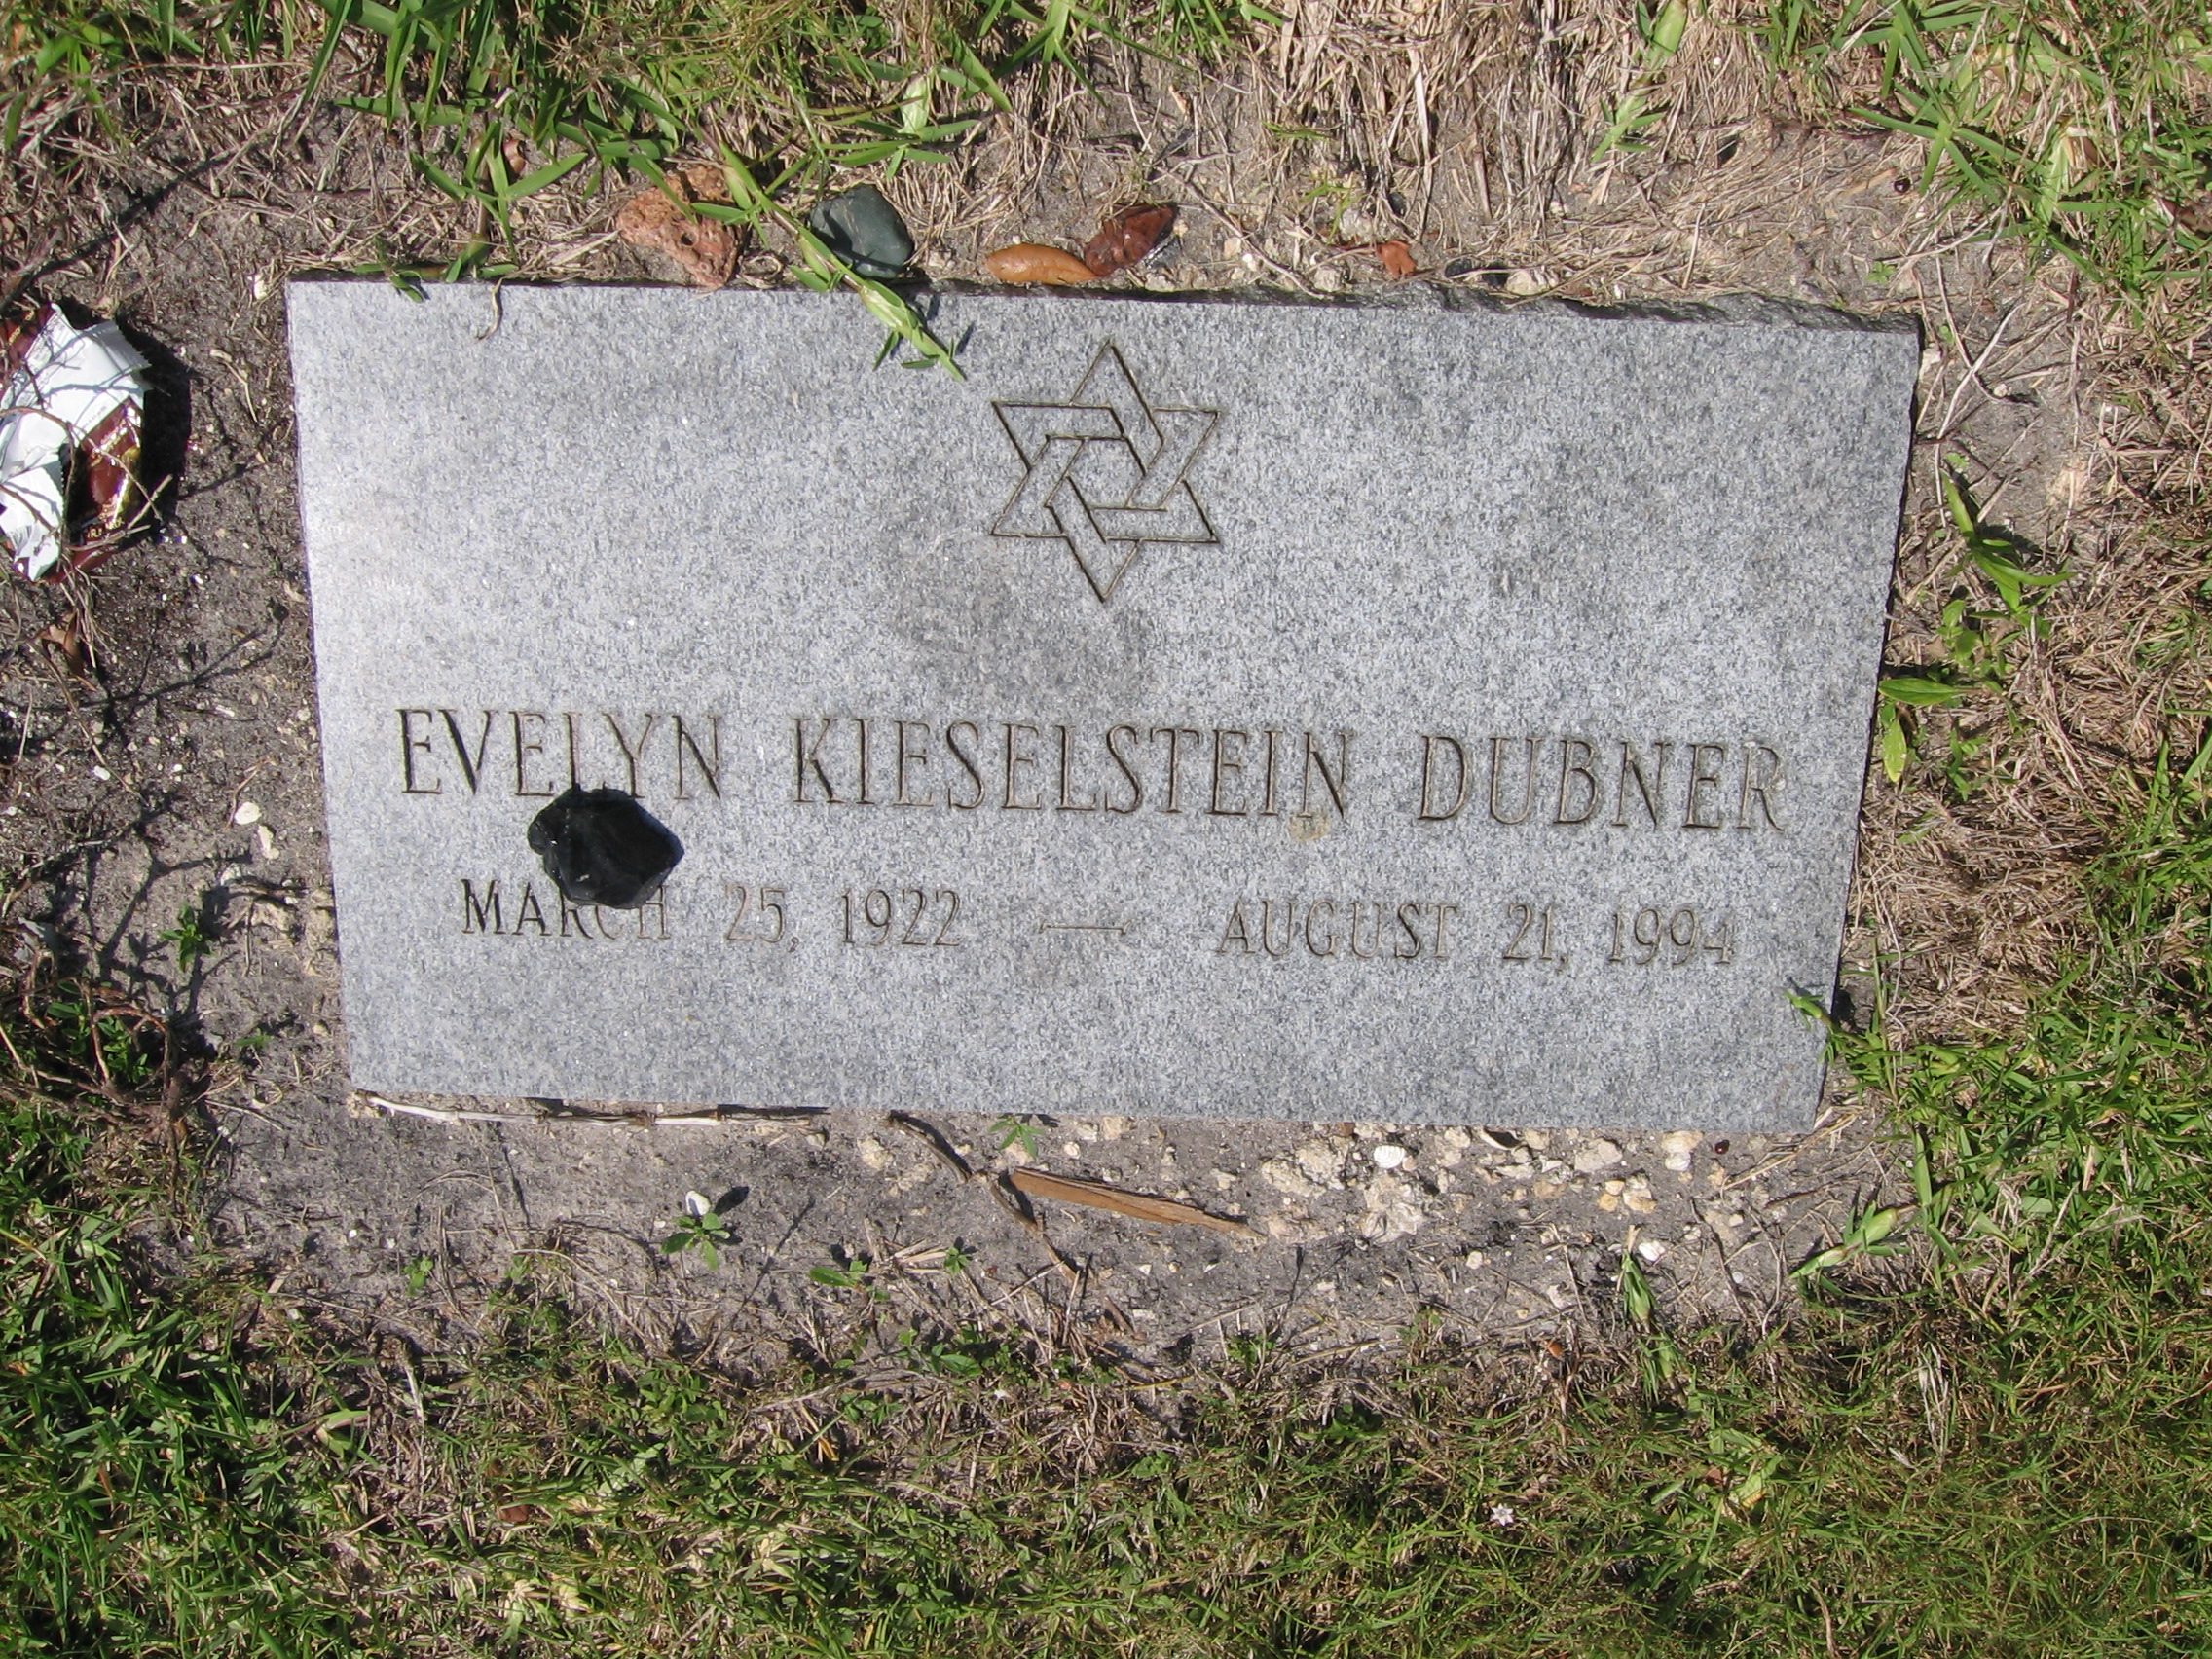 Evelyn Kieselstein Dubner